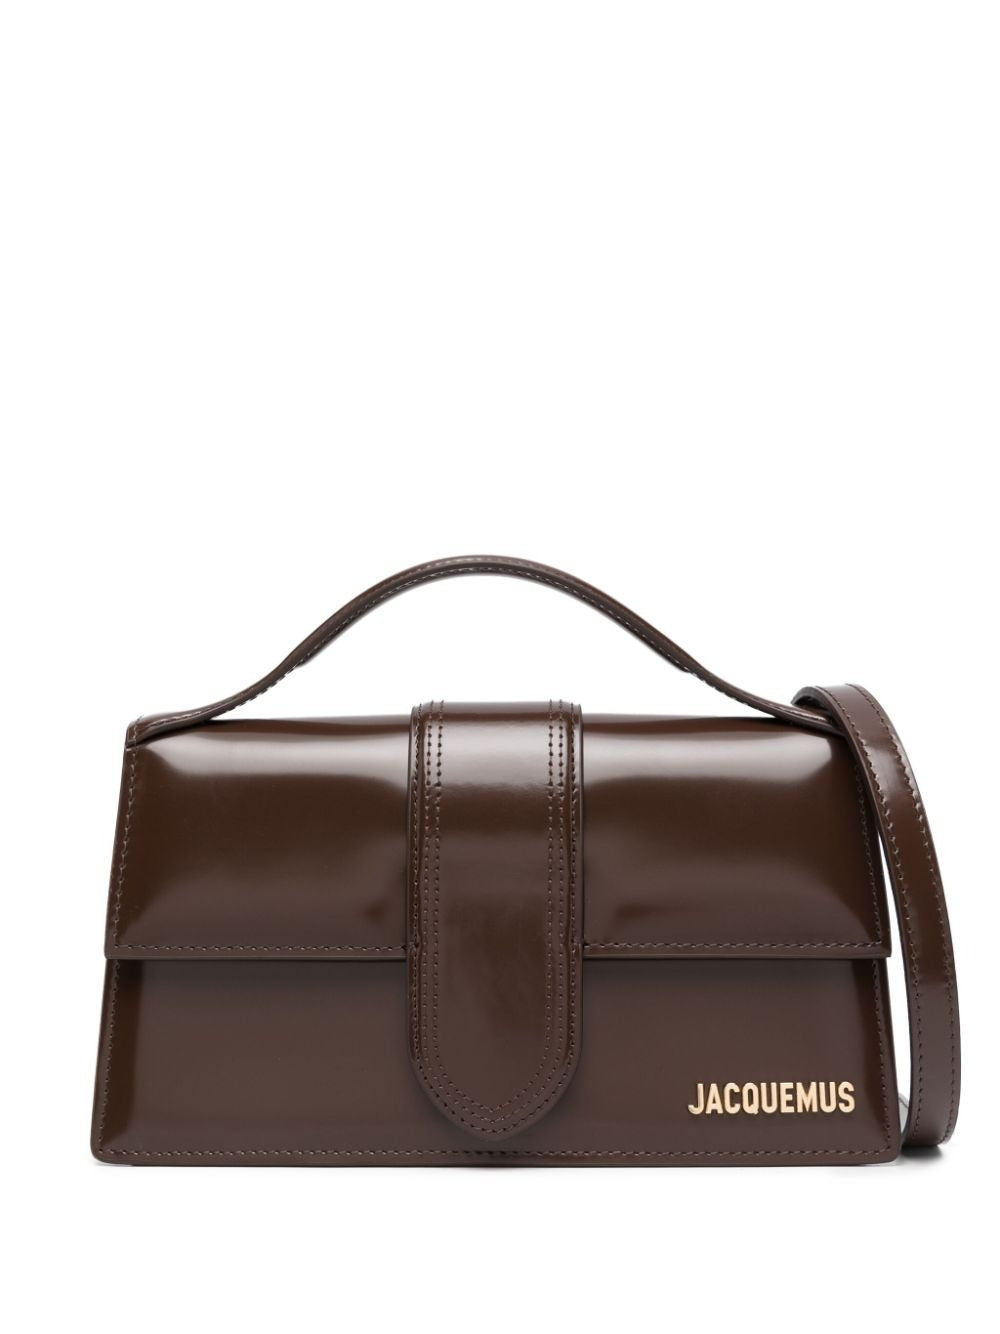 Le grand bambino handbag by Jacquemus